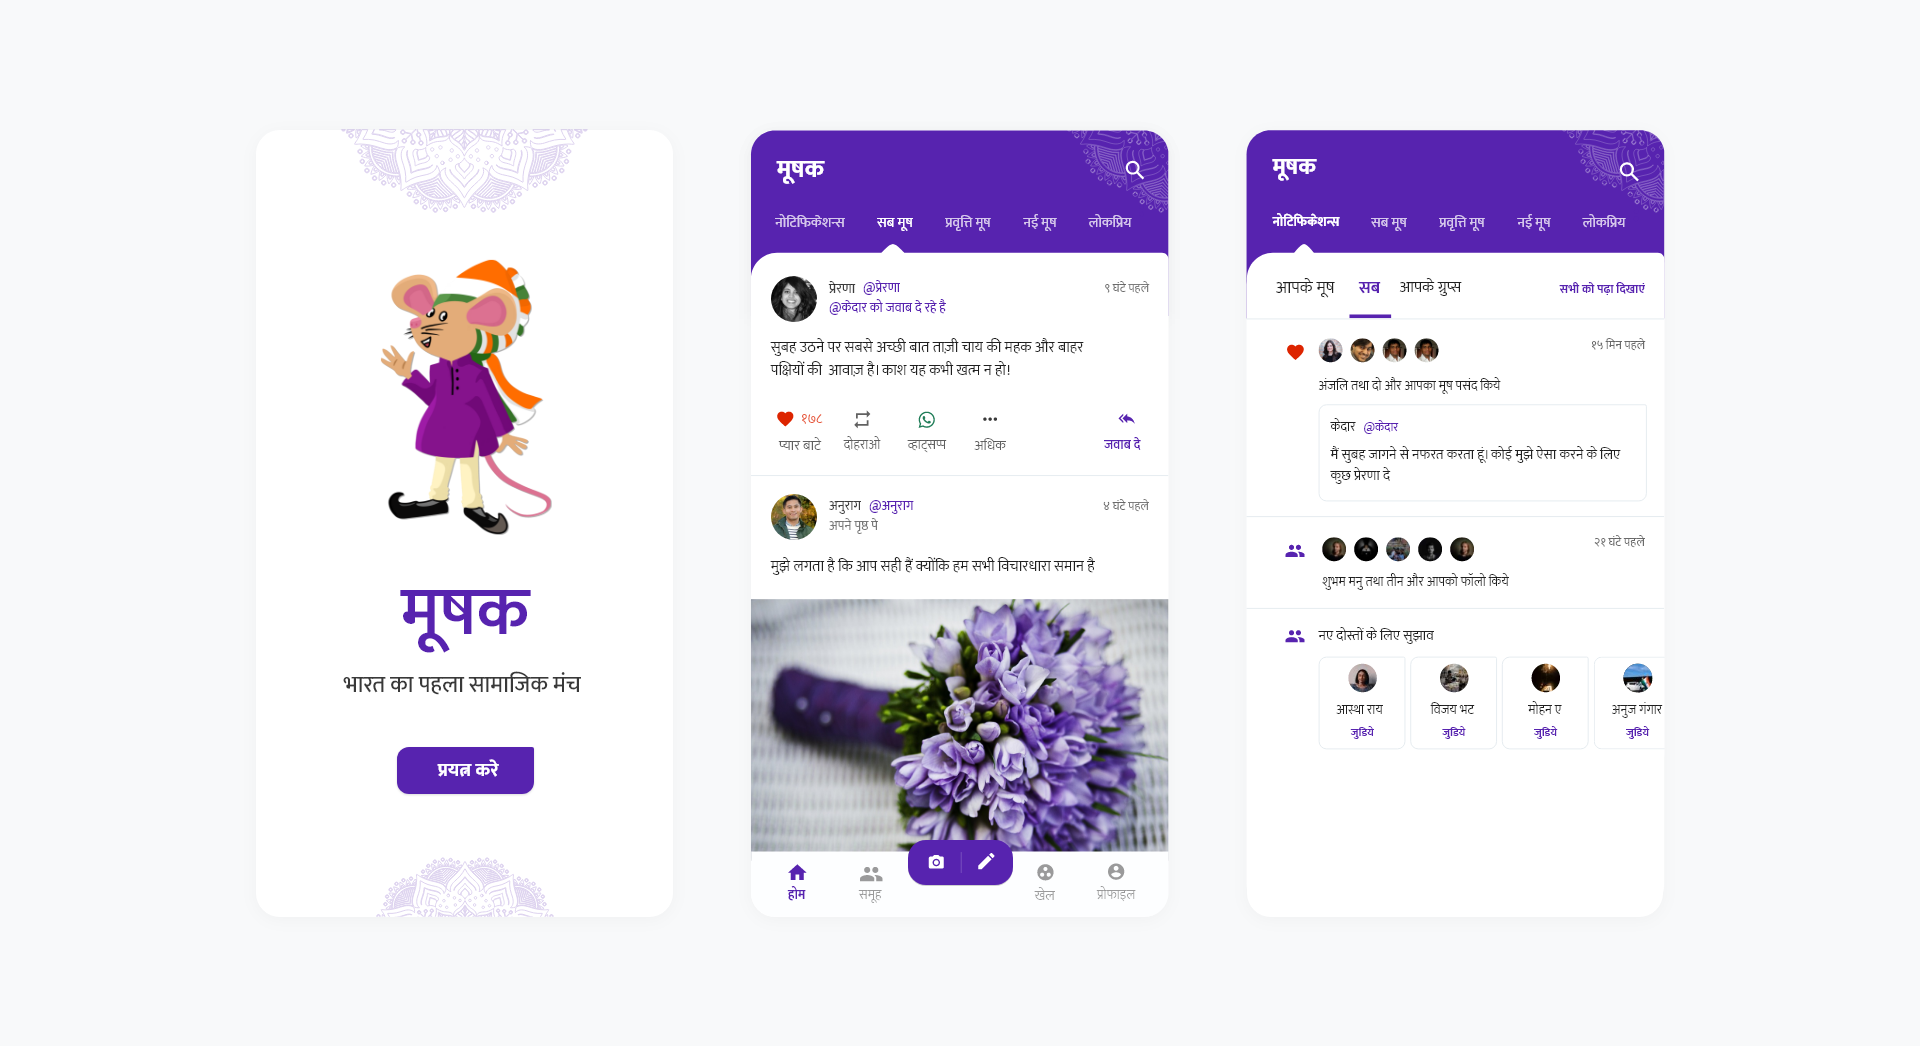 Mooshak, the social platform for India